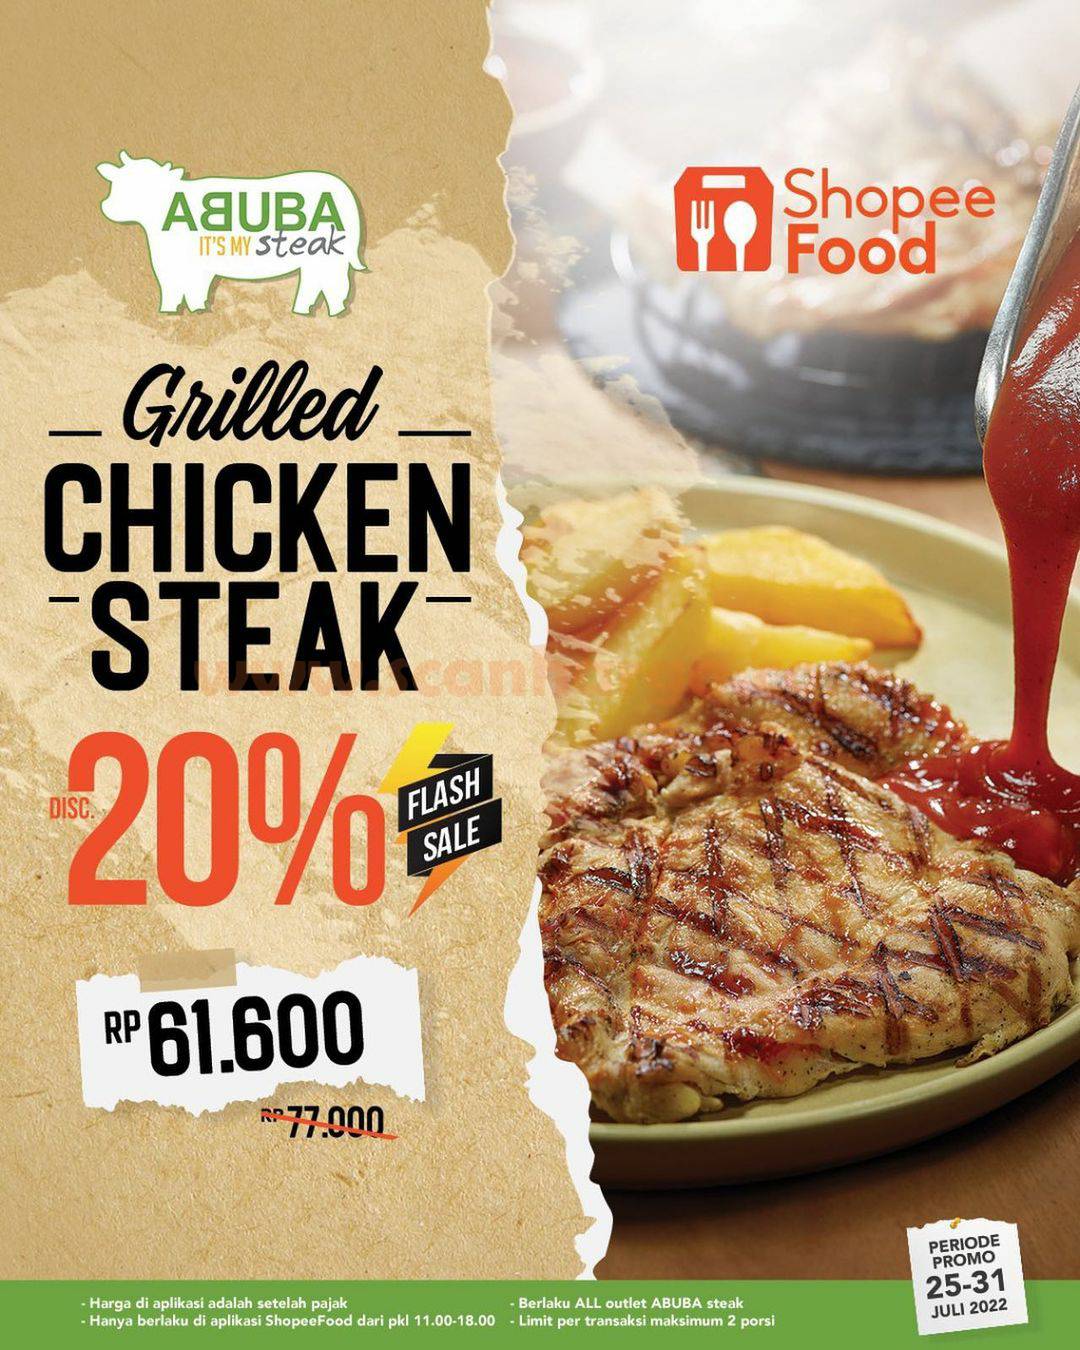 ABUBA STEAK Promo FLASH SALE SHOPEEFOOD – Grilled Chicken Steak Diskon 20%